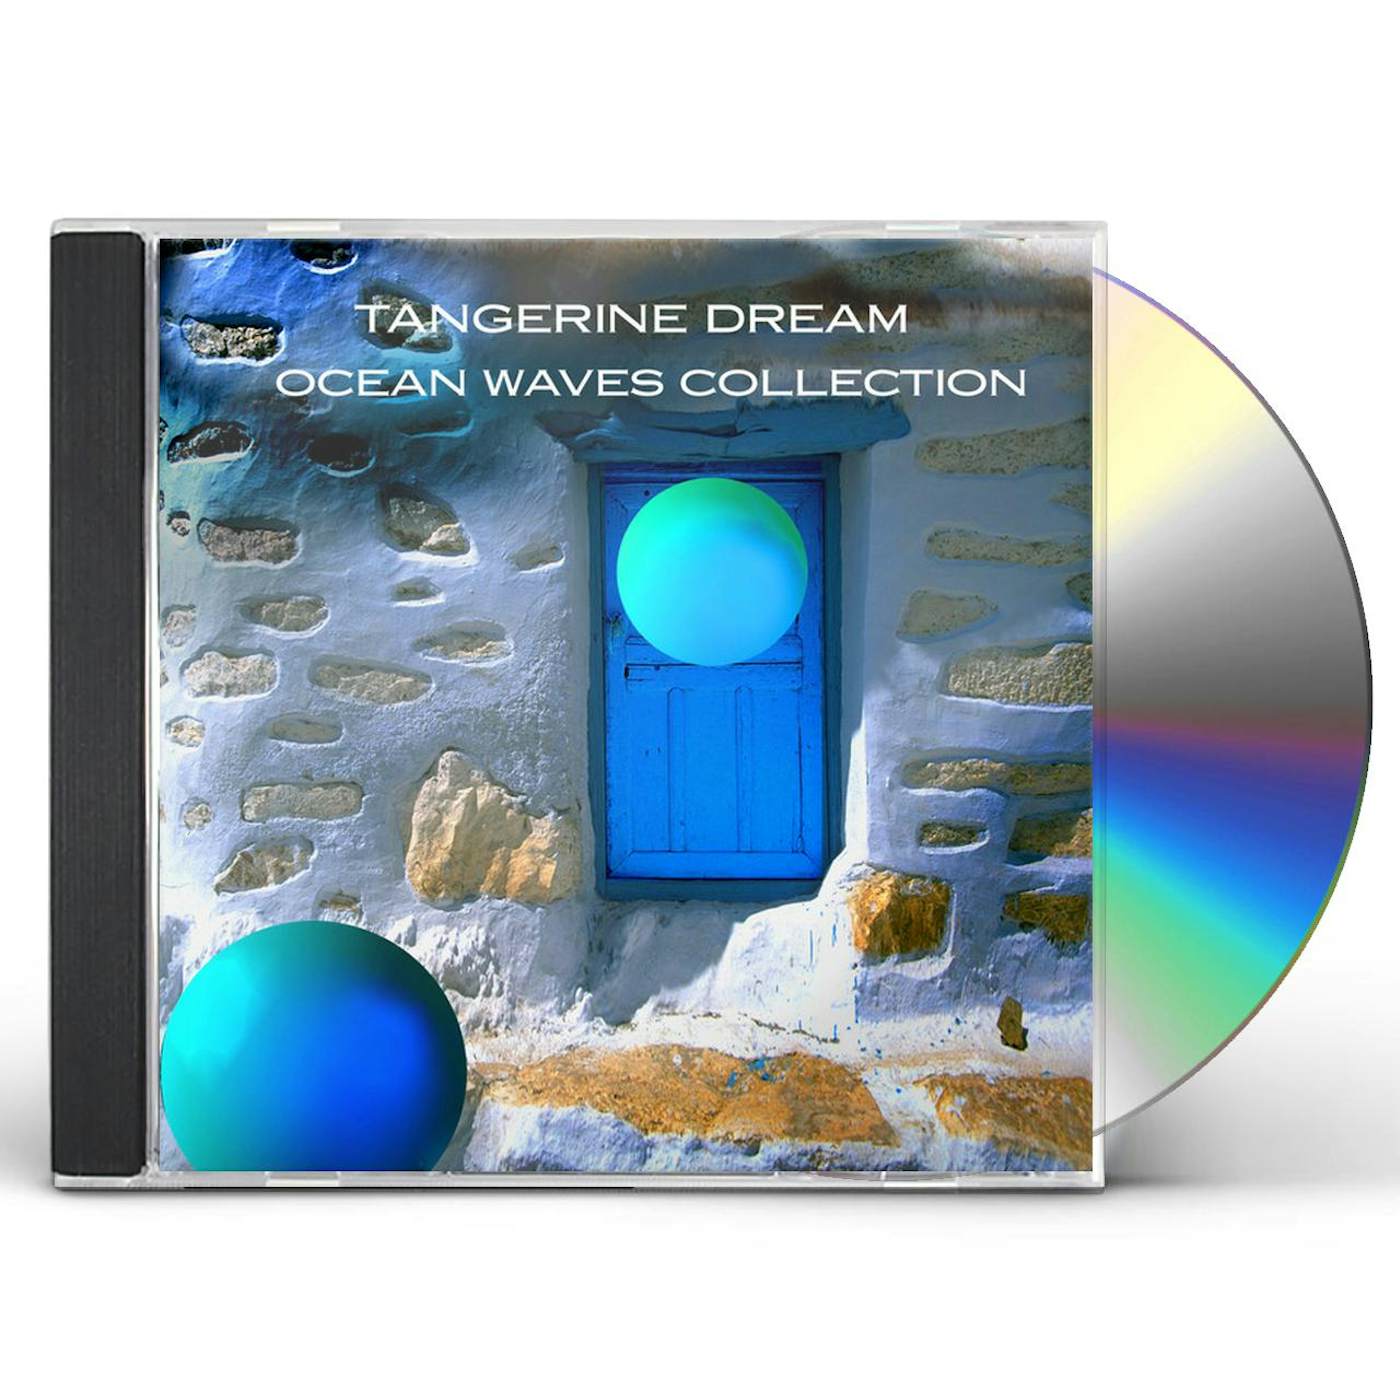 Tangerine Dream OCEAN WAVES COLLECTION CD